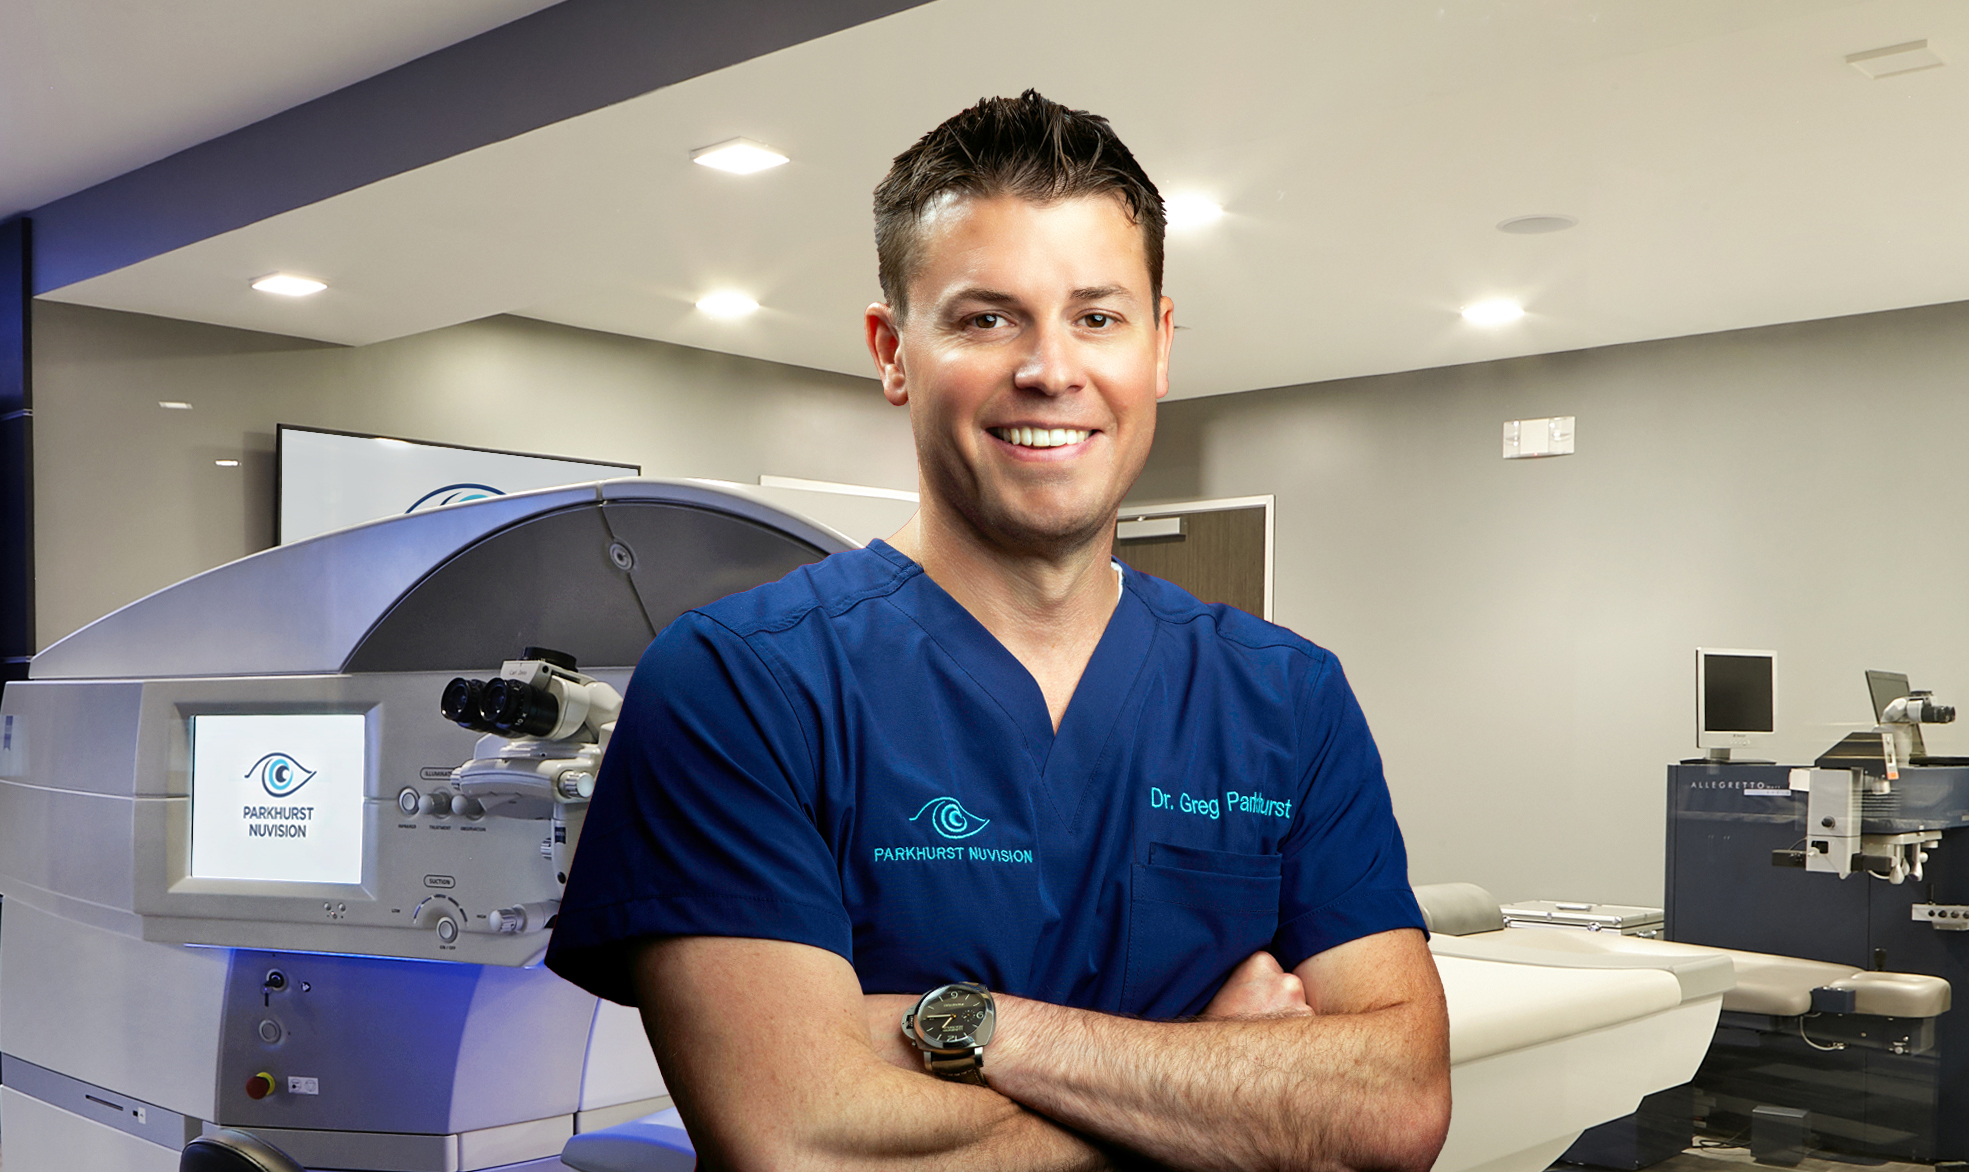 Dr. Gregory Parkhurst Parkhurst NuVision LASIK Eye Surgery San Antonio (210)851-9587